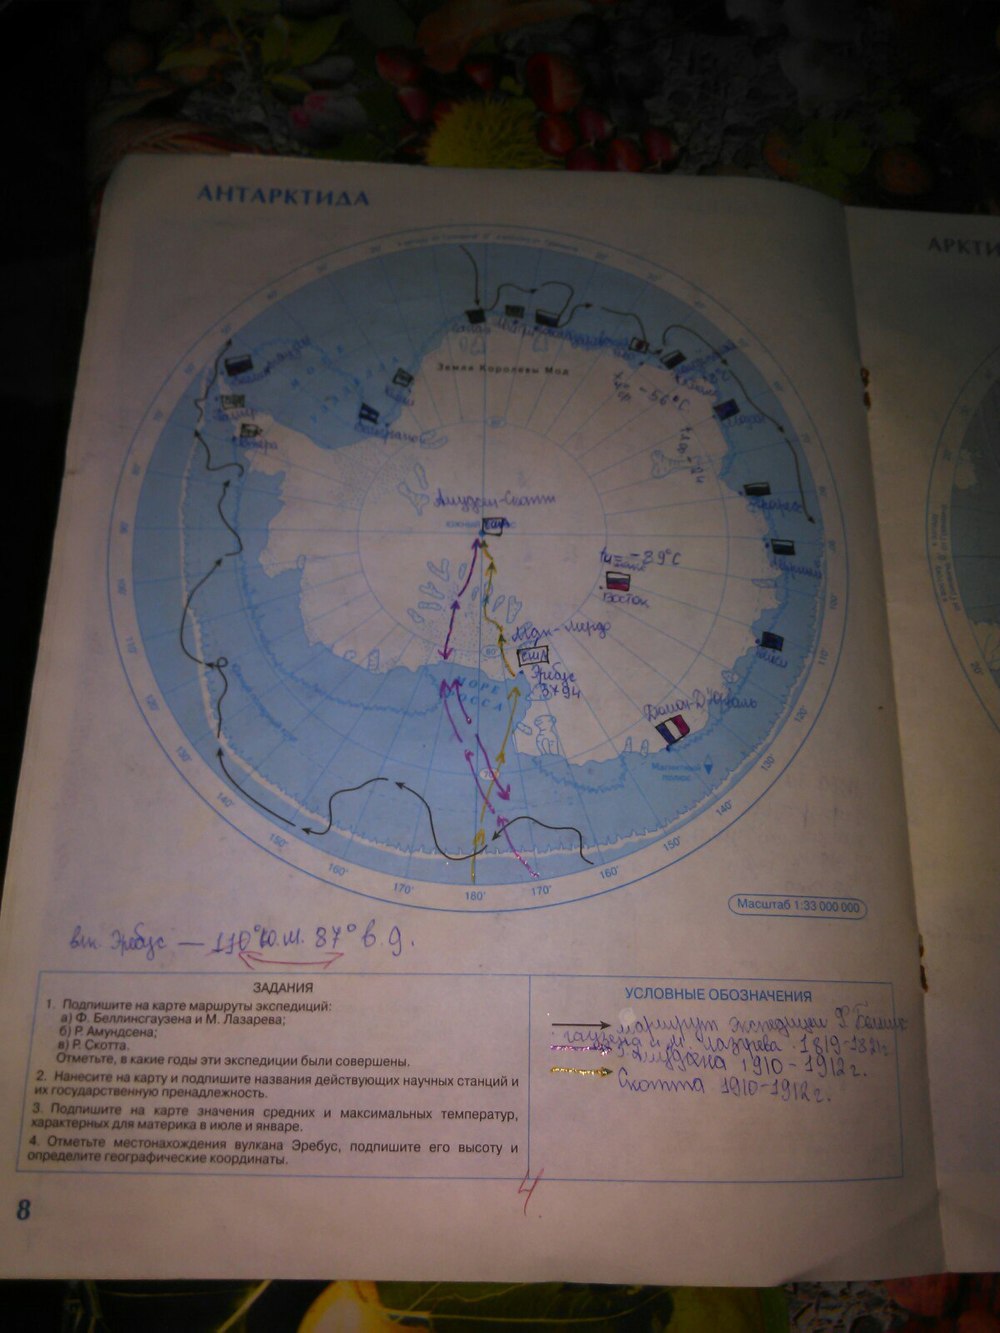 География стр 72. Карта по географии 7 класс Антарктида. Контурная карта по географии 7 класс Антарктида. Антарктида на карте 7 класс география. География 7 класс контурные карты Антарктида.